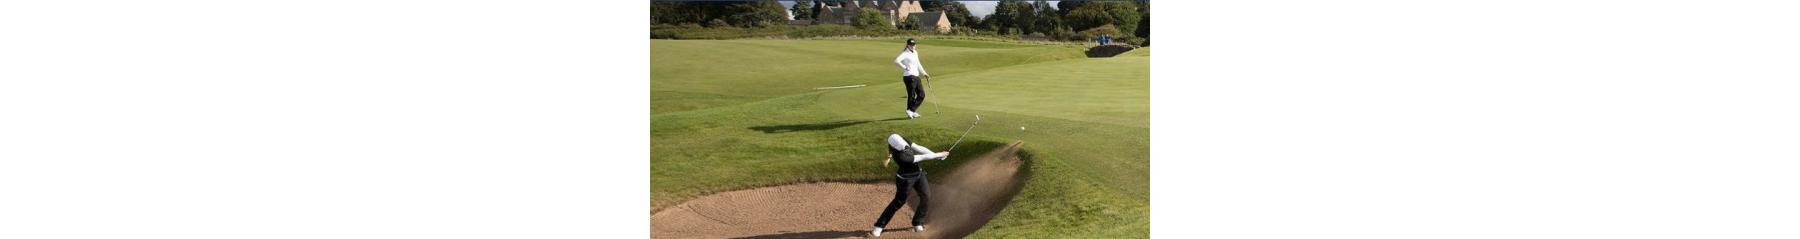 Funding to attract headermodwomen and girls into golf credir RandA